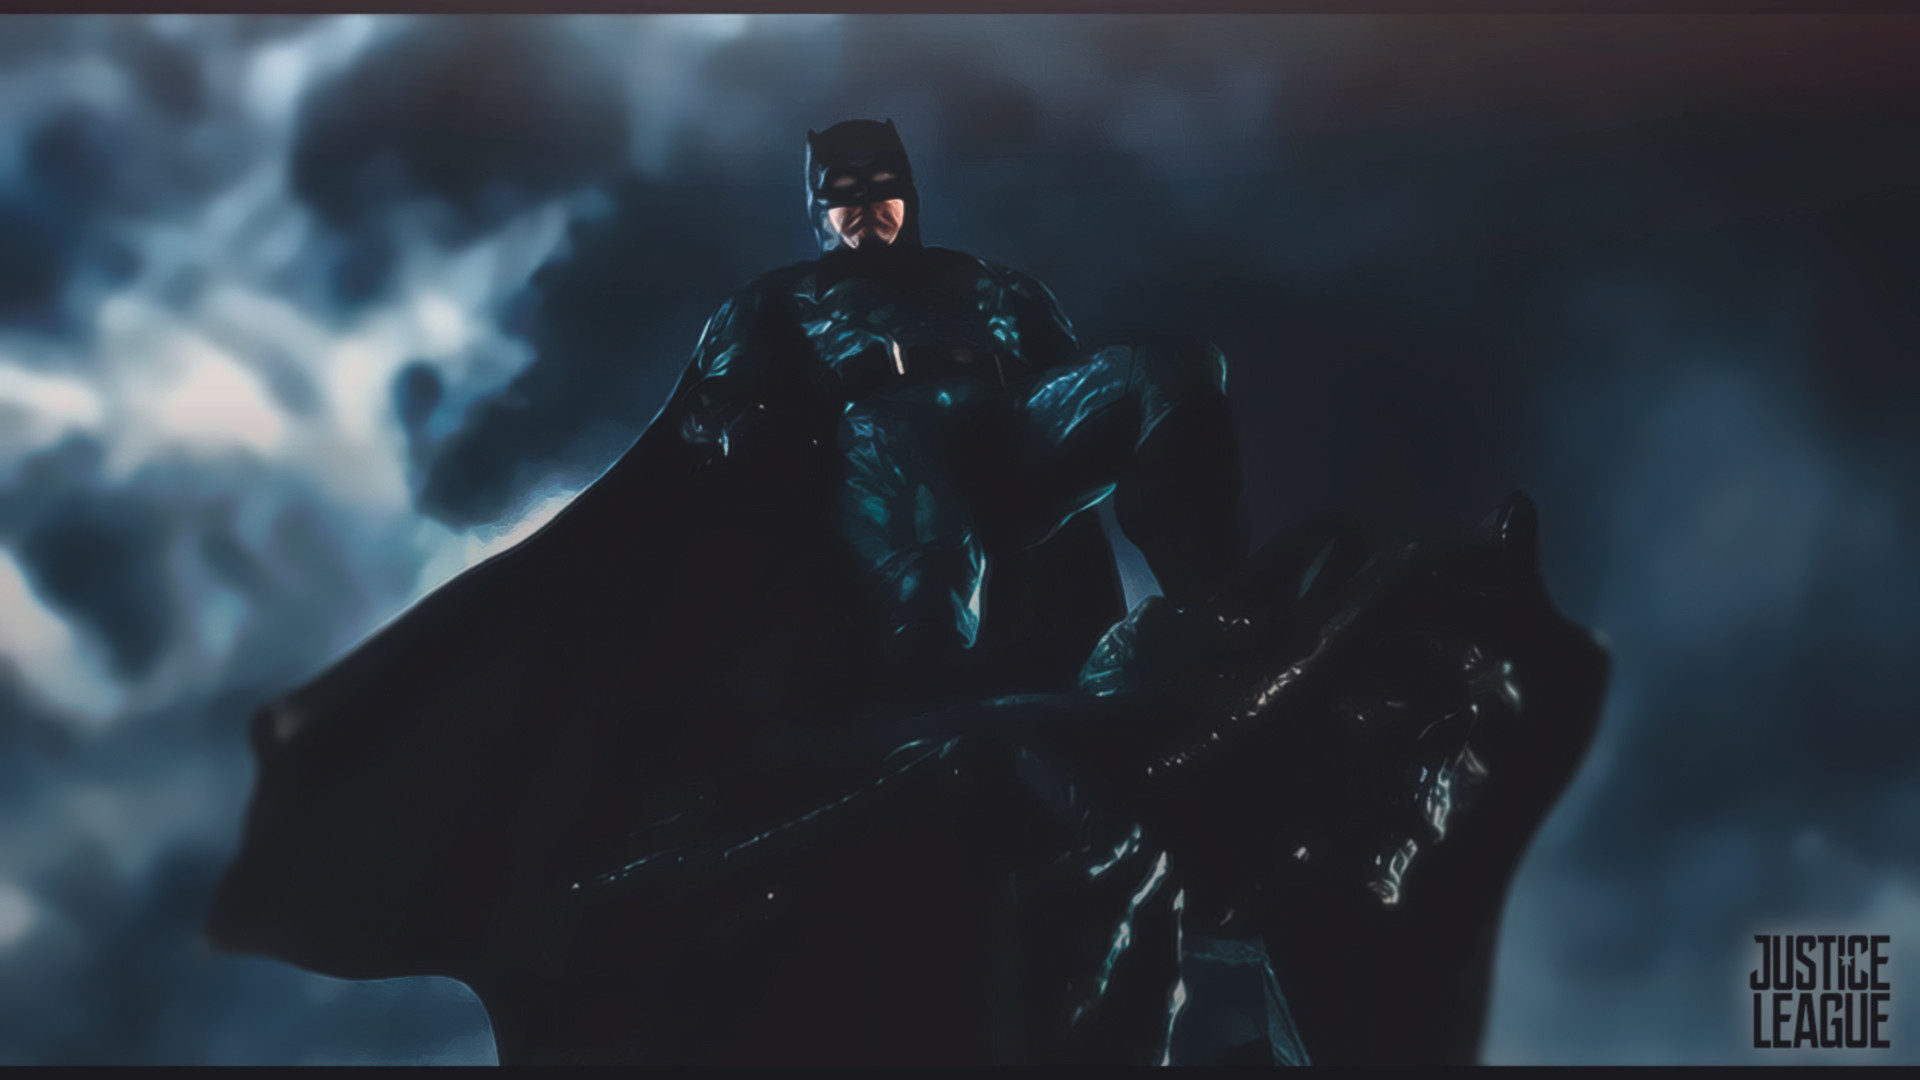 1920x1080 ... Wallpaper: The Batman | Justice League by 4n4rkyX